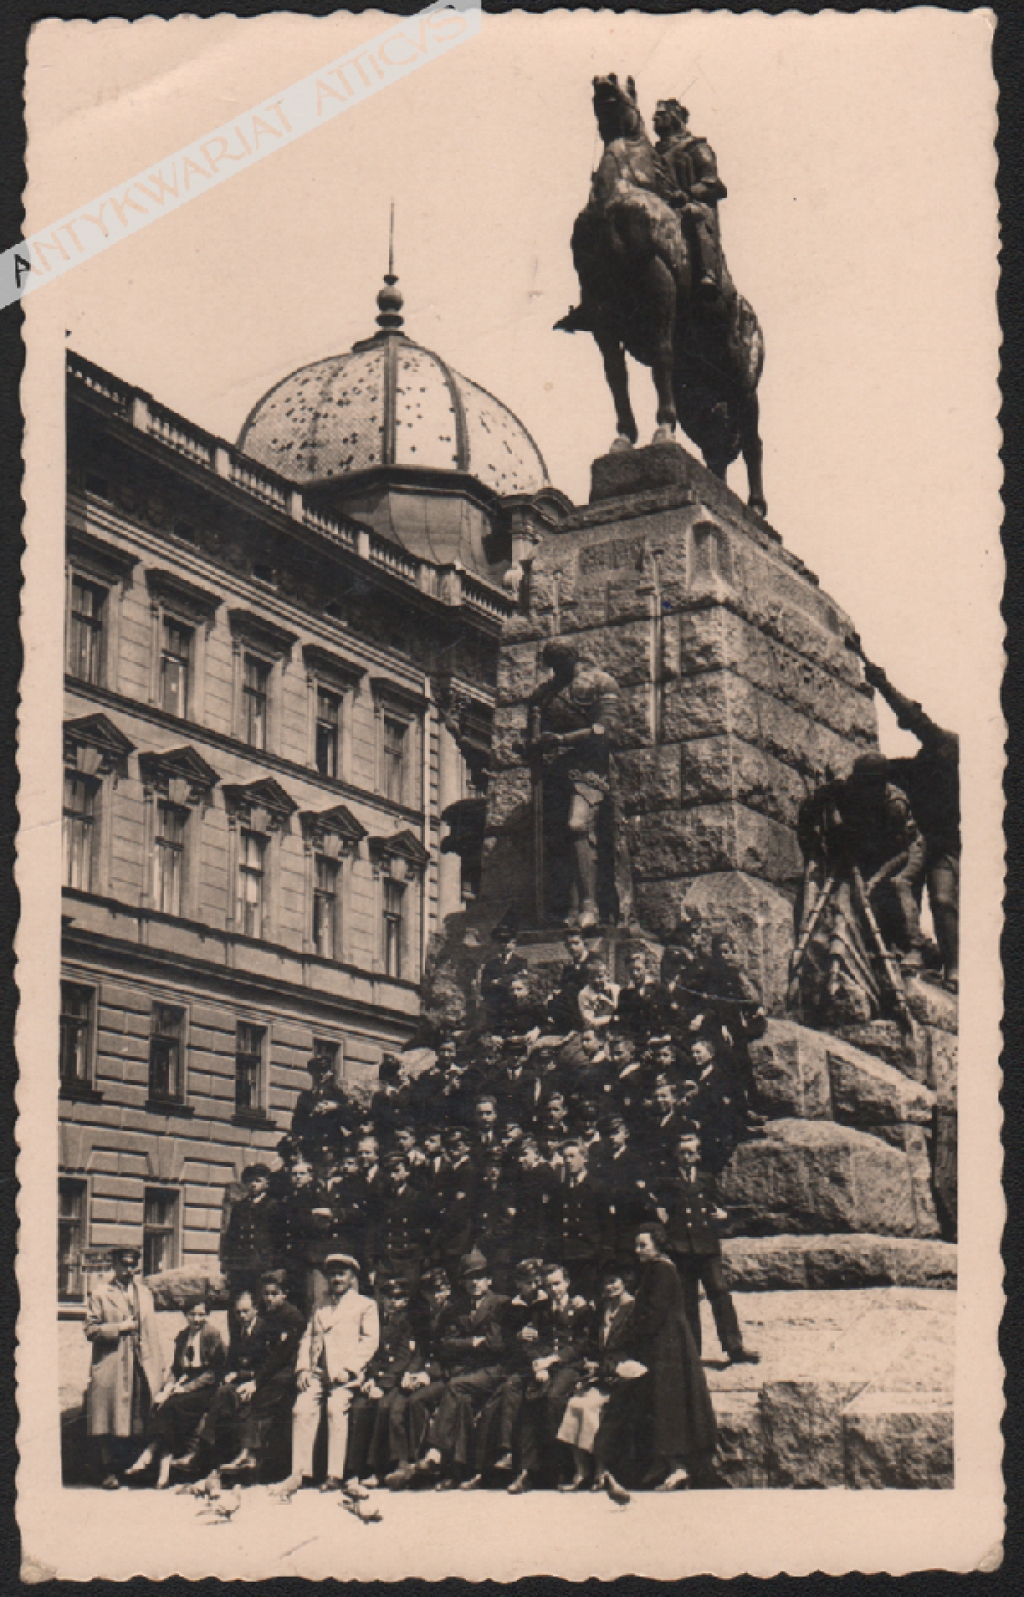 [fotografia, 1935] Kraków. Pomnik Grunwaldzki